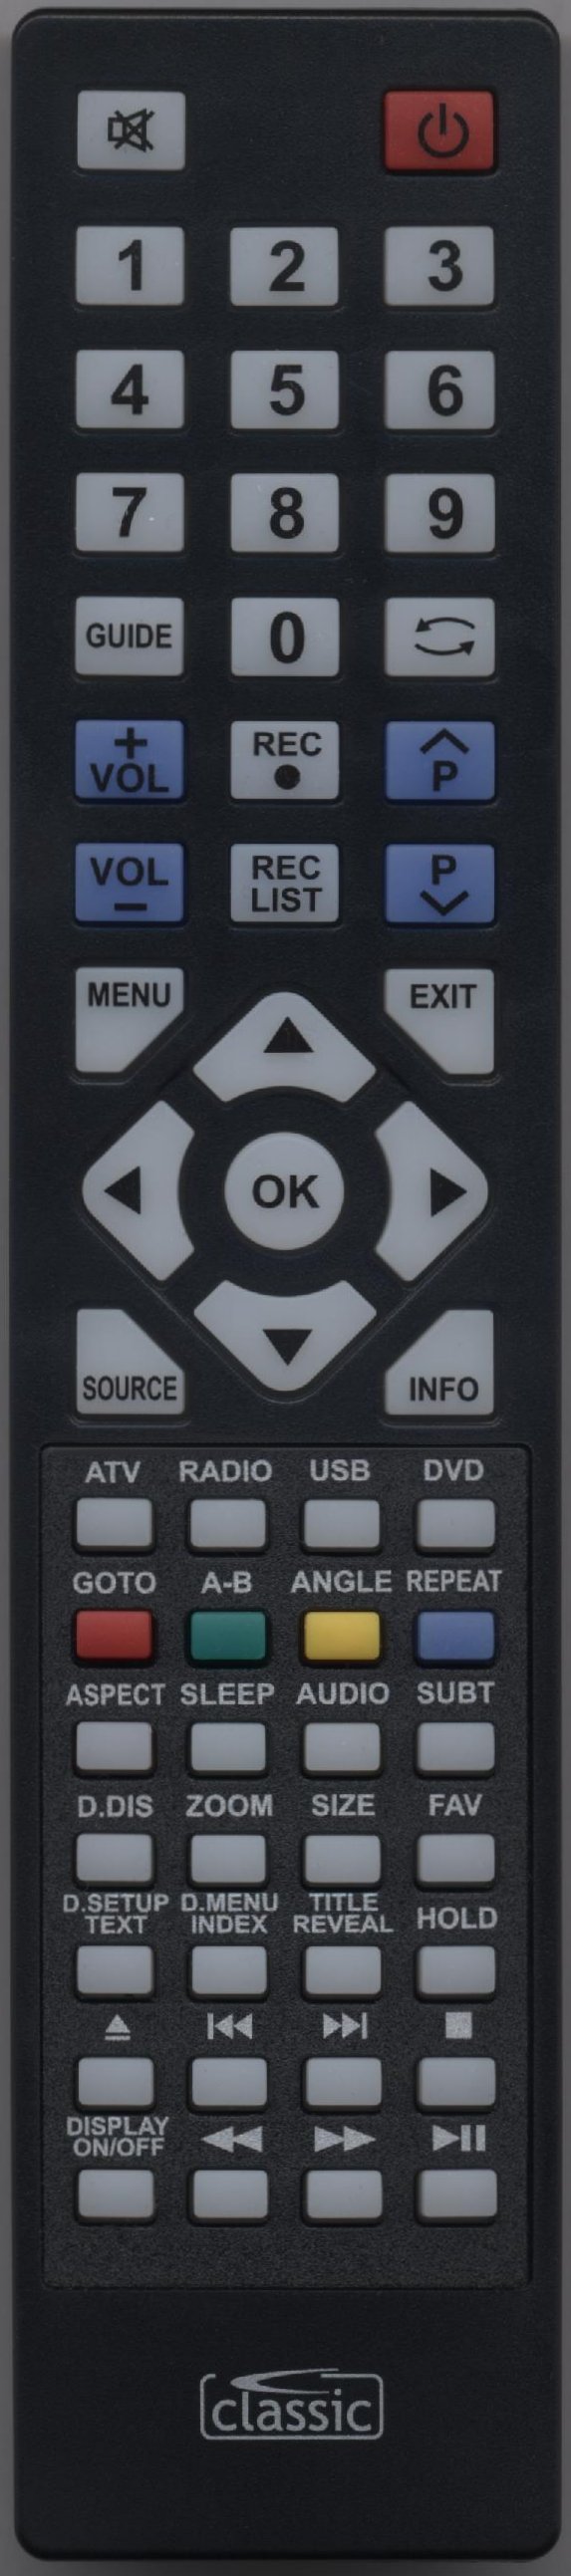 TEVION M26/28E-GB-TCDUP/009 Remote Control